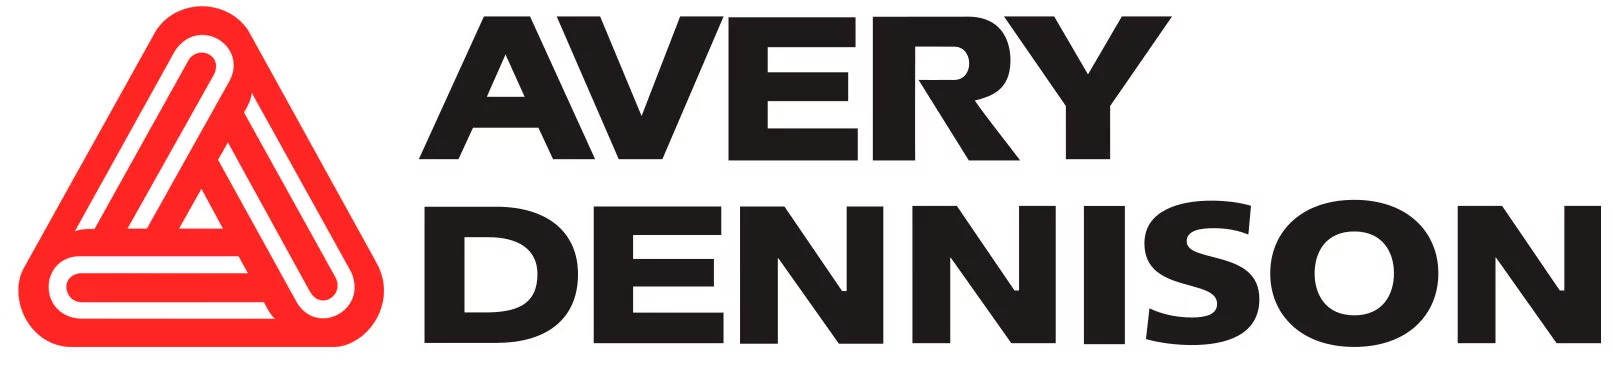 Avery Dennison логотип изображение